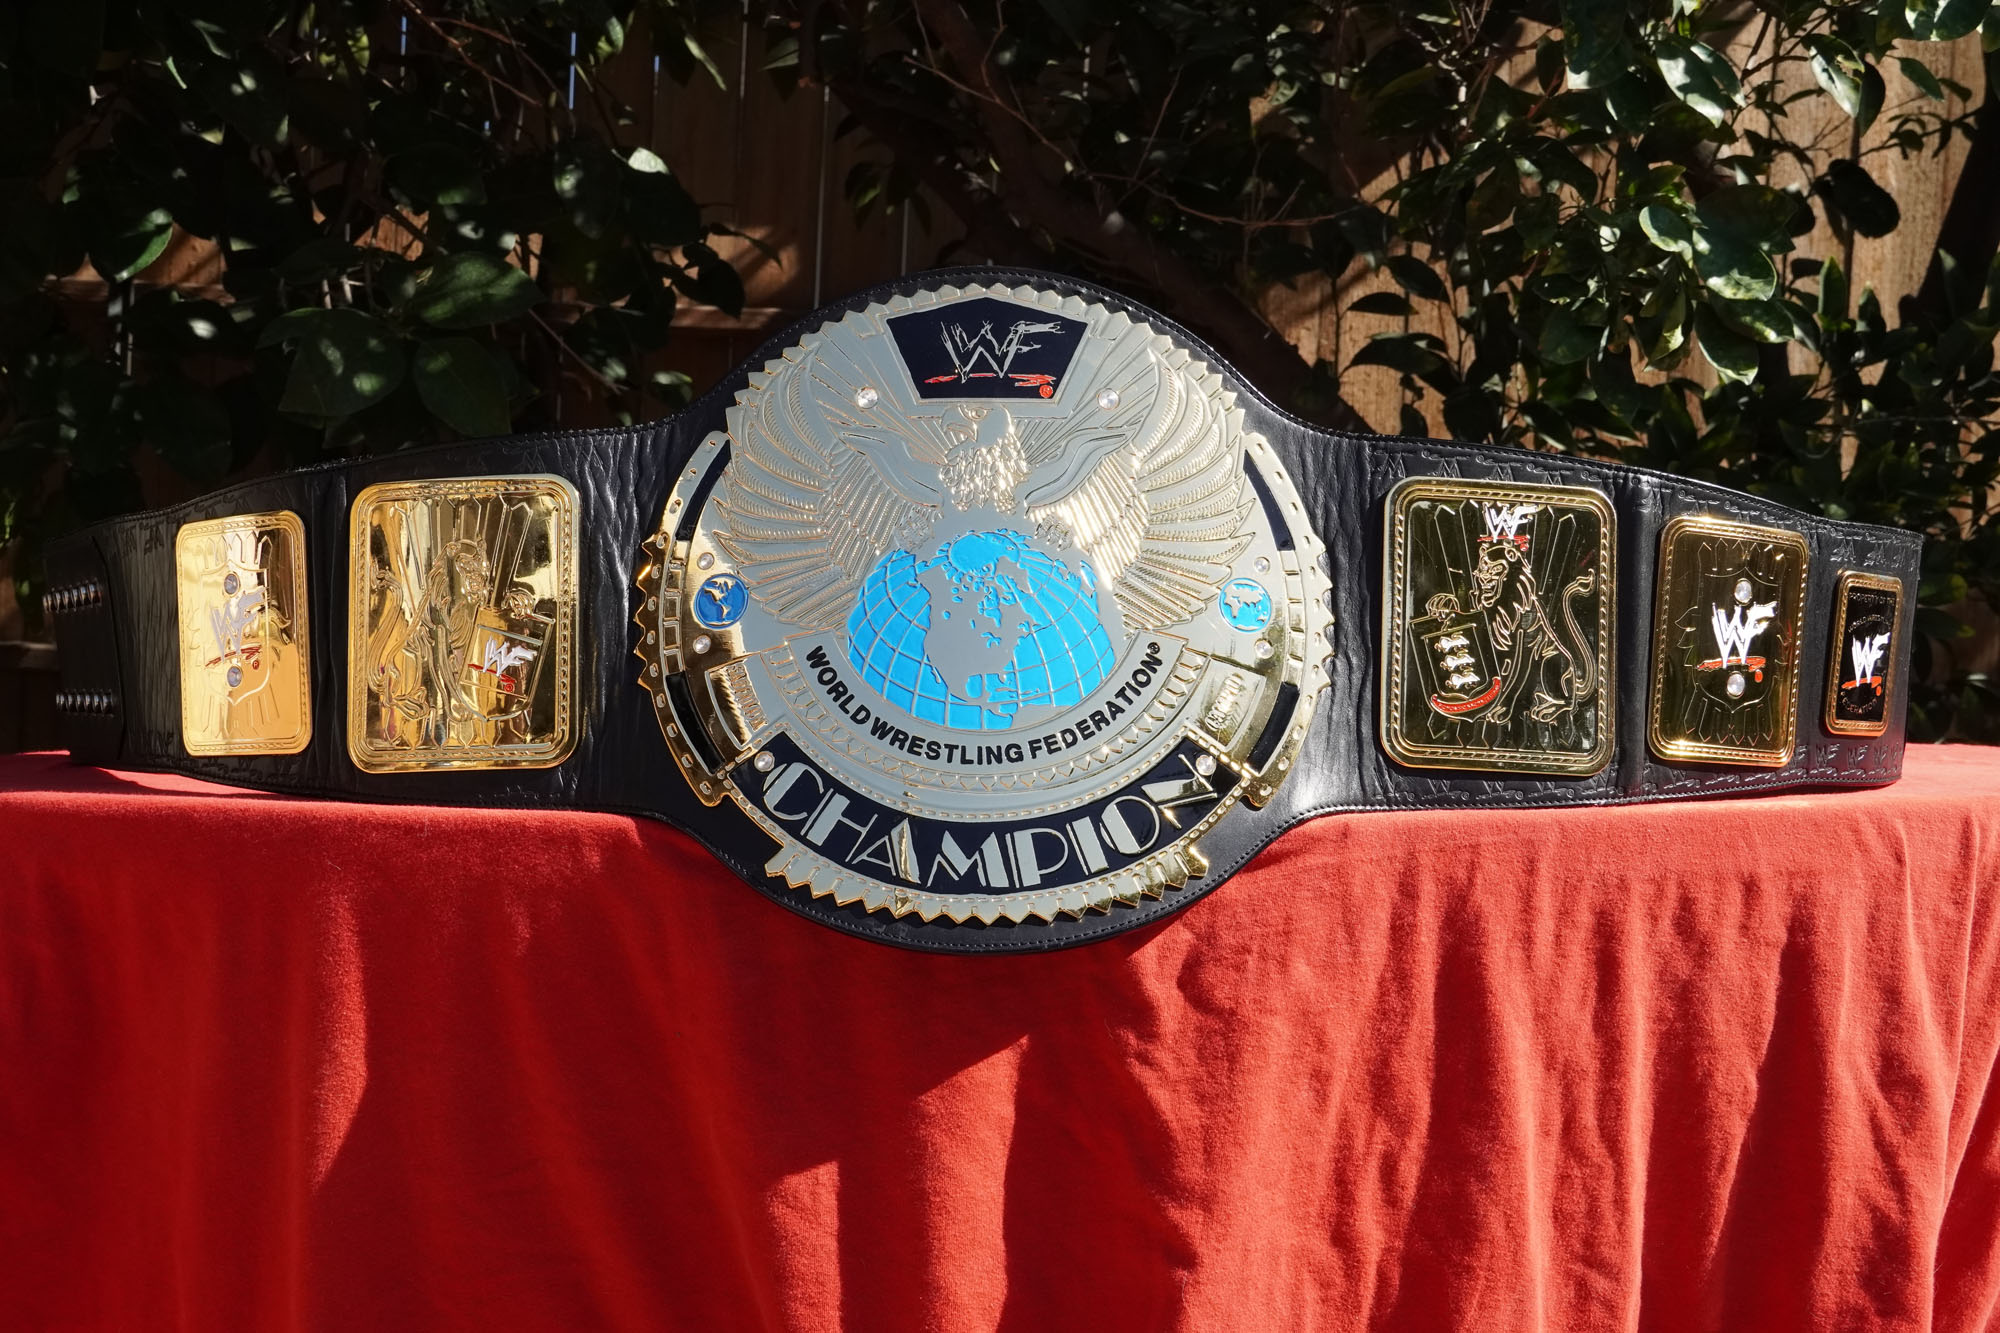 wwf champion belt